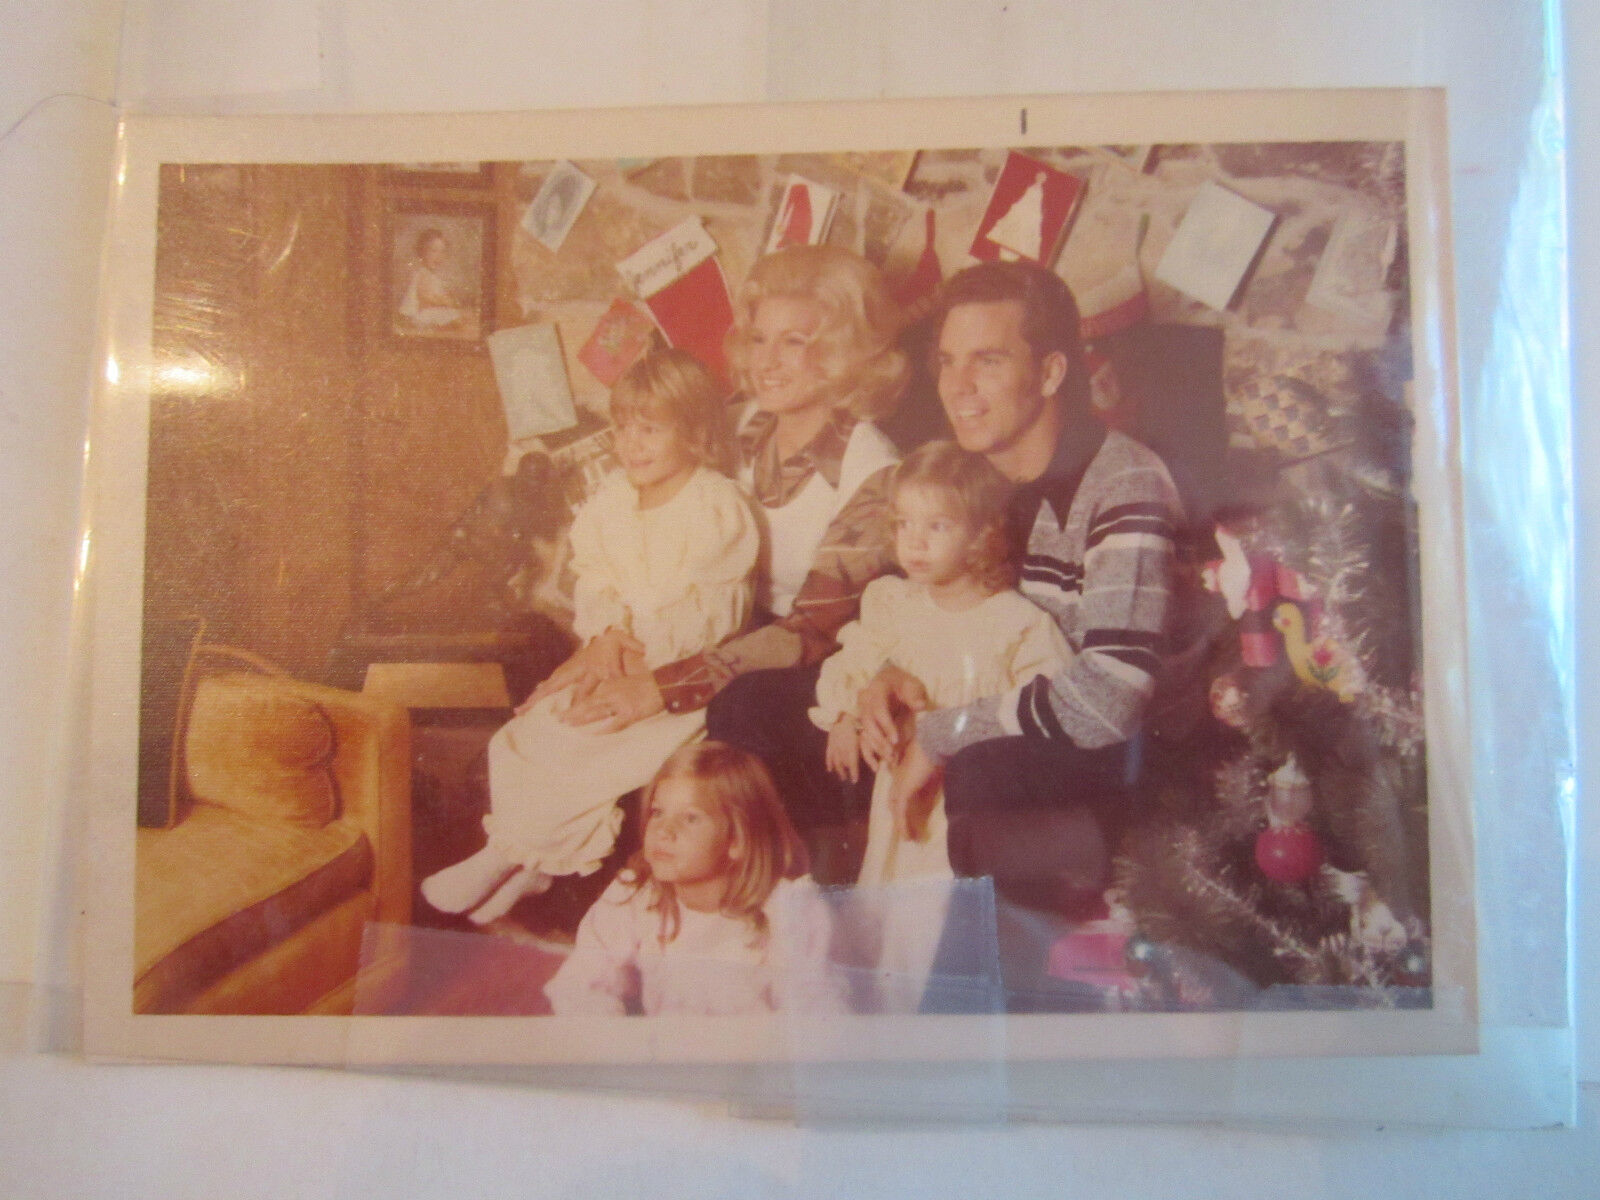 1972 ROGER STAUBACH PHOTO OF FAMILY DURING CHRISTMAS - ORIGINAL 5\